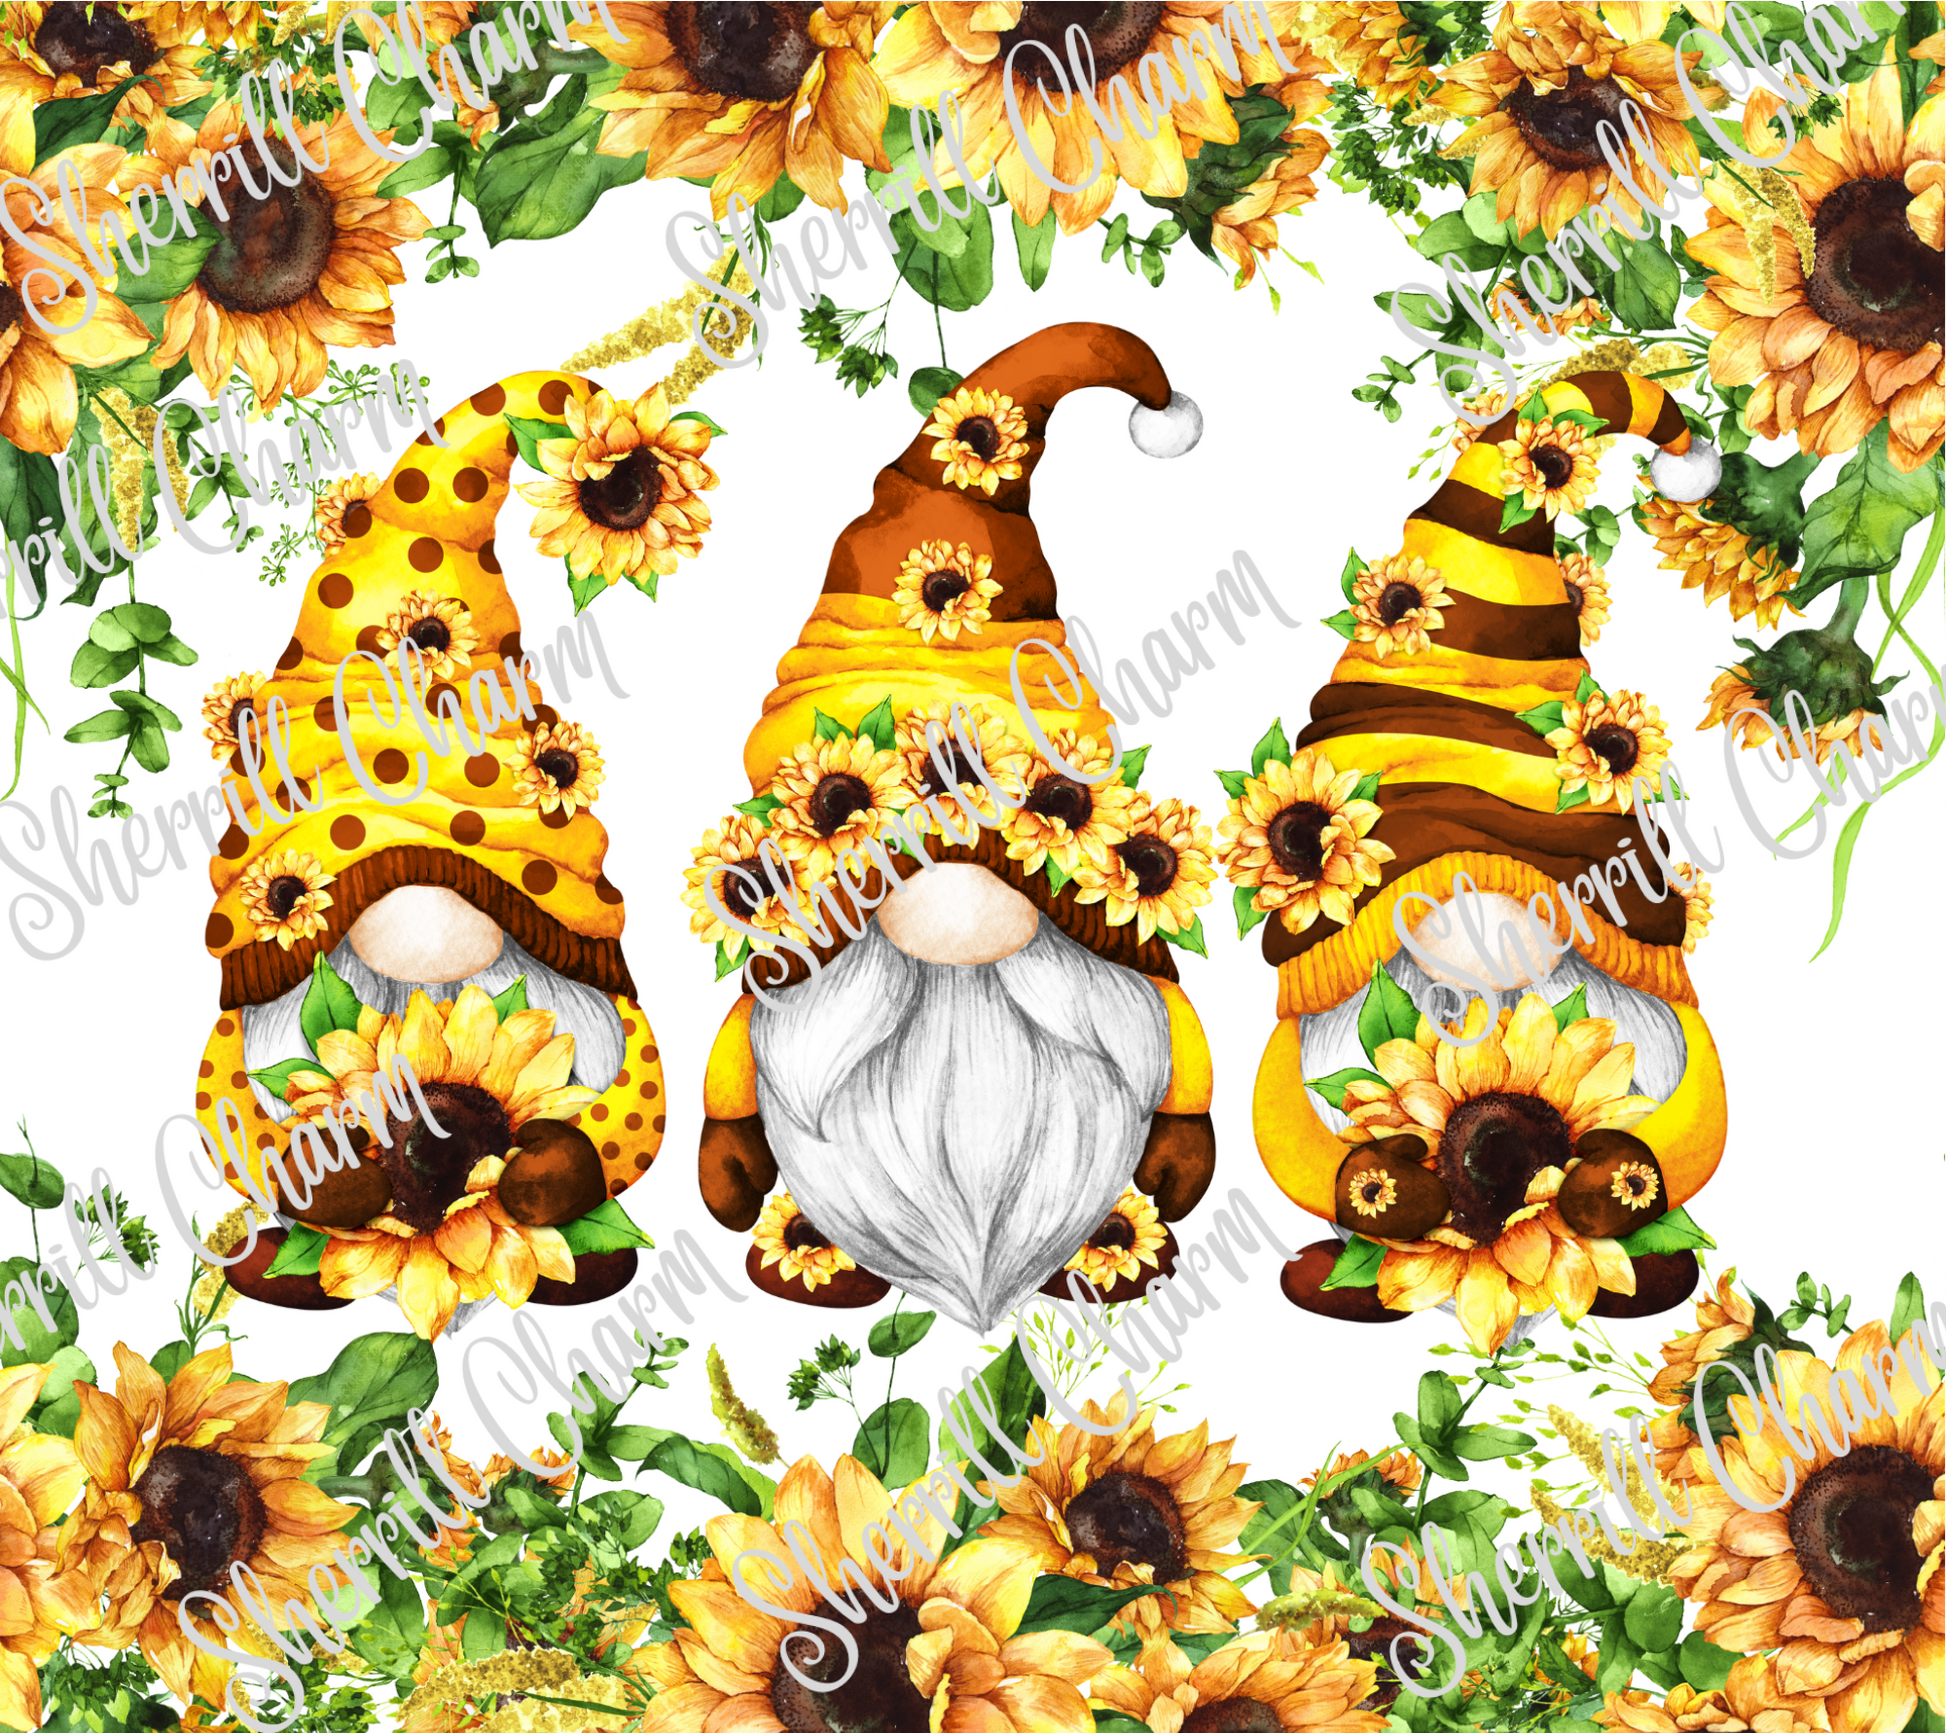 Herrschners Sunflower Gnome Pony Bead Kit